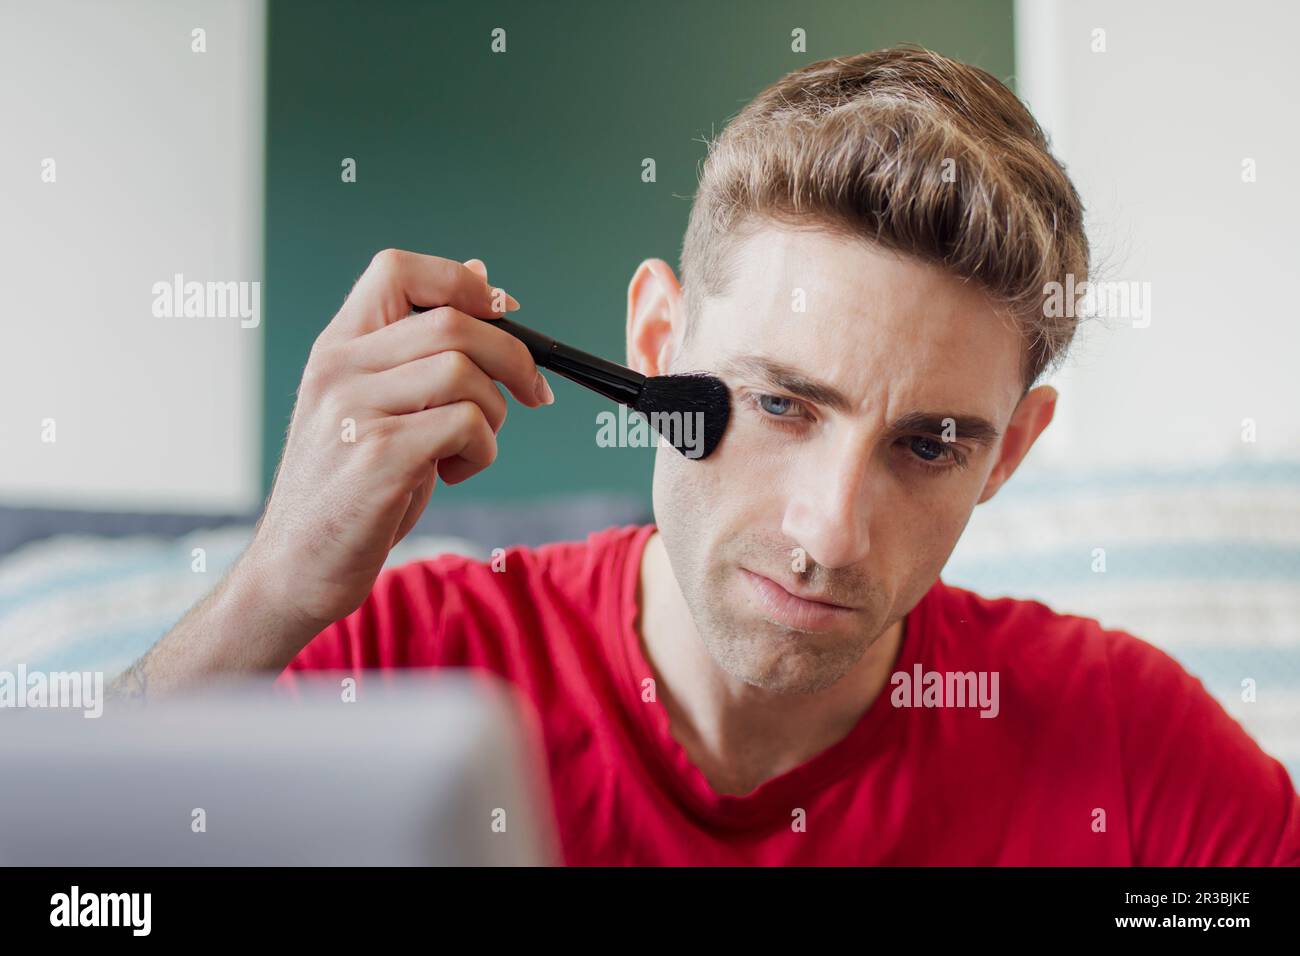 Man applying make-up with brush Stock Photo